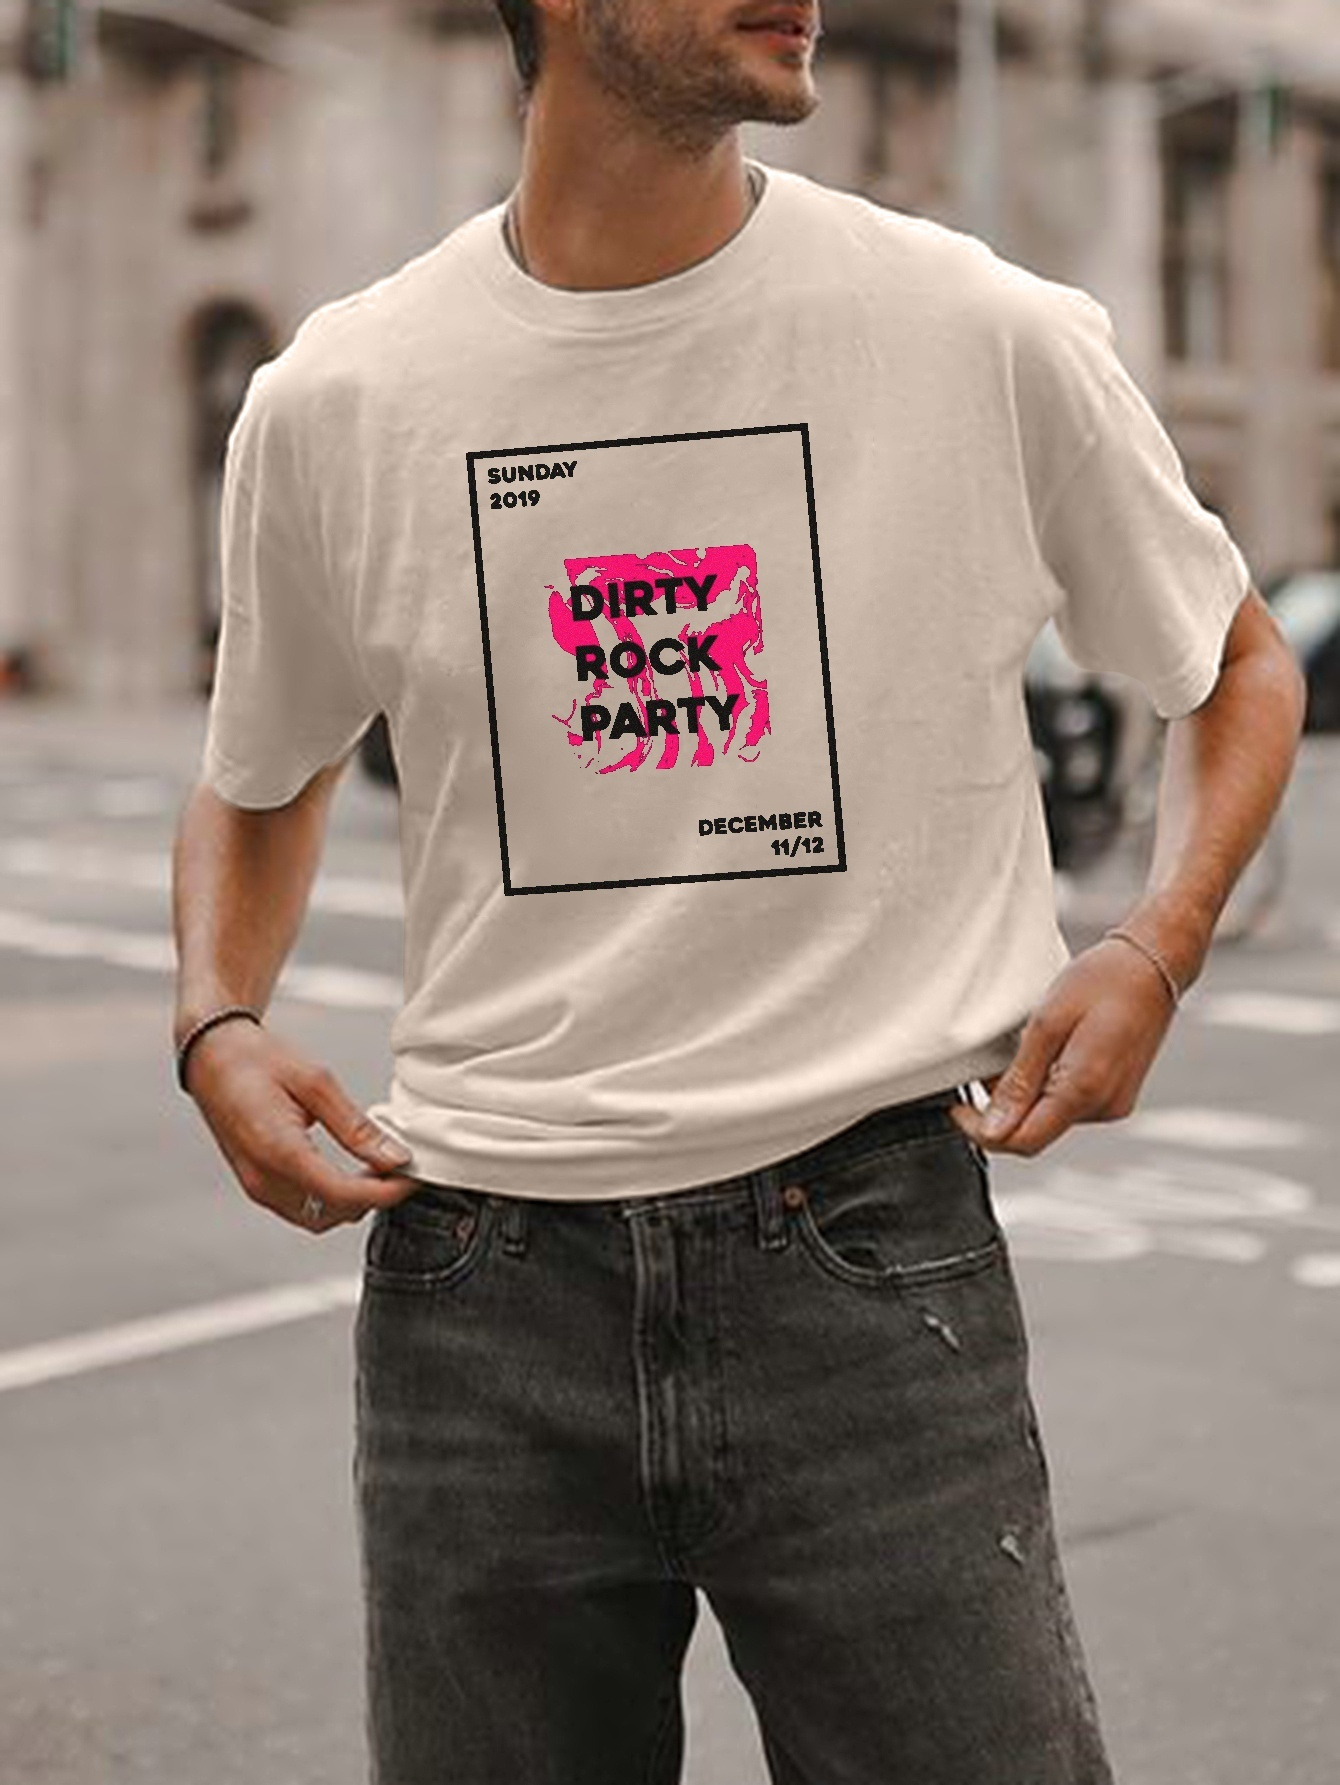 Bait Dirty Joke Print T Shirt, Tees For Men, Casual Short Sleeve T-shirt For Summer